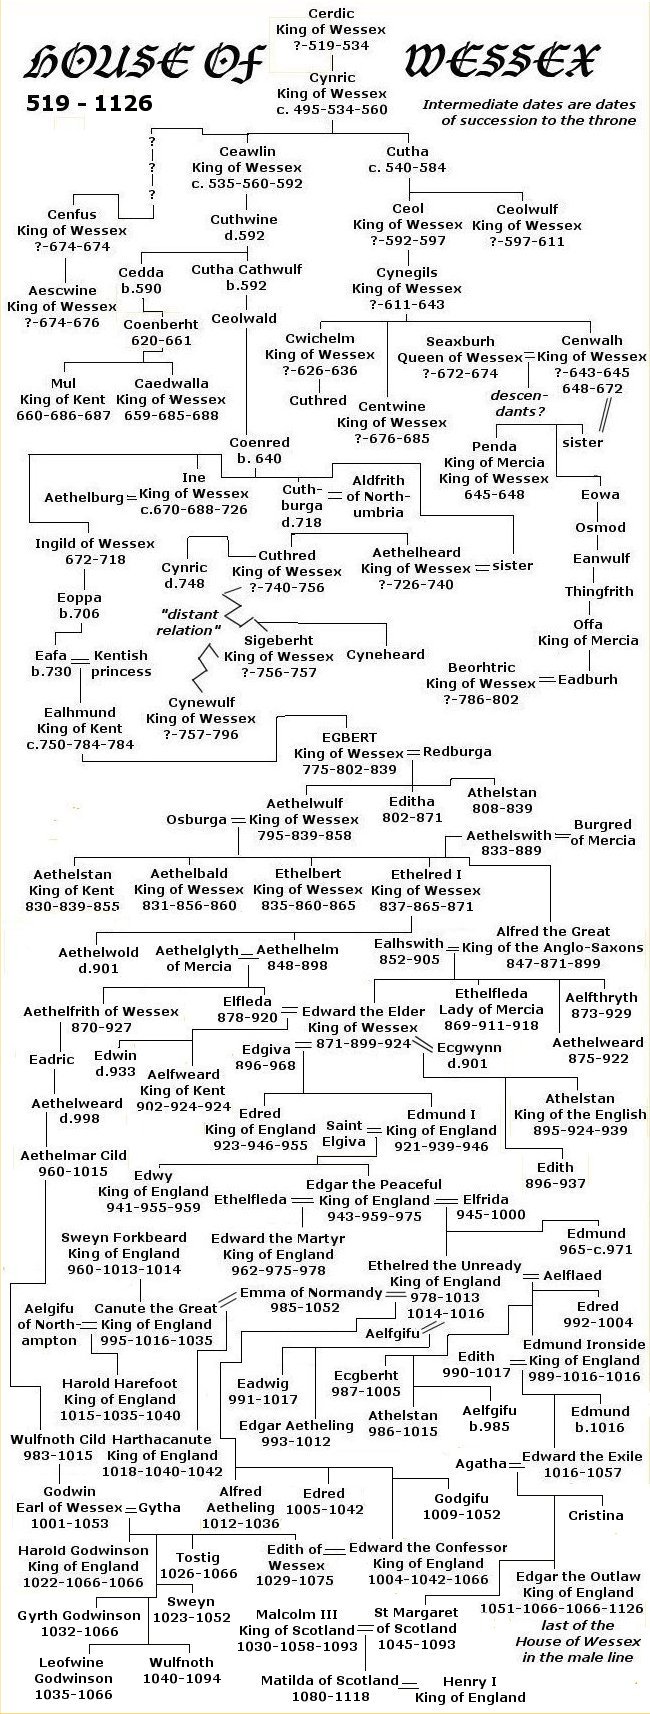 Wessex family tree.jpg